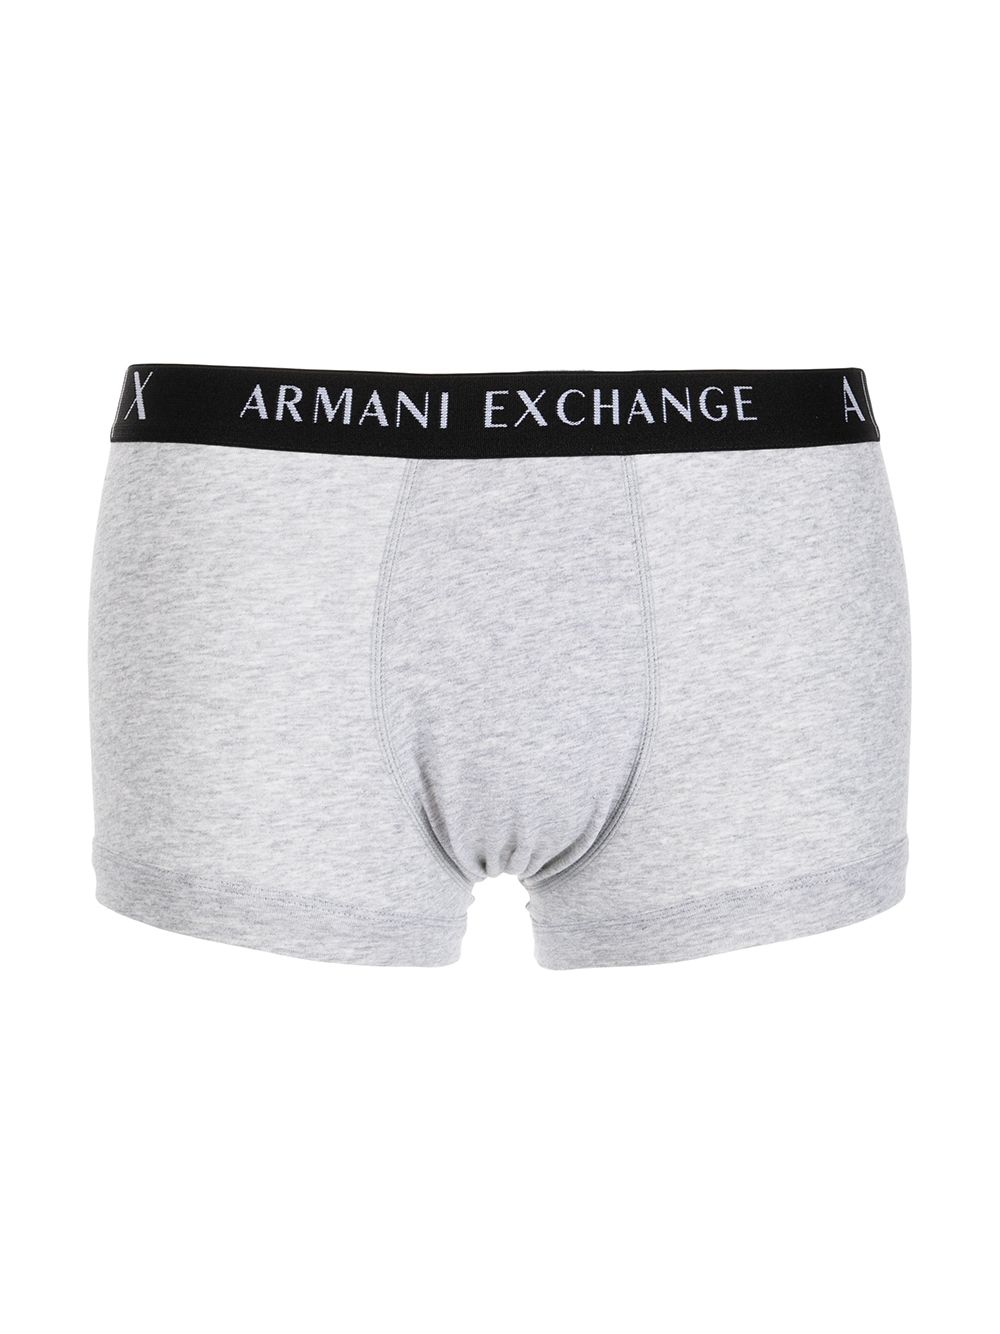 Armani Exchange ロゴ ボクサーパンツ セット Farfetch